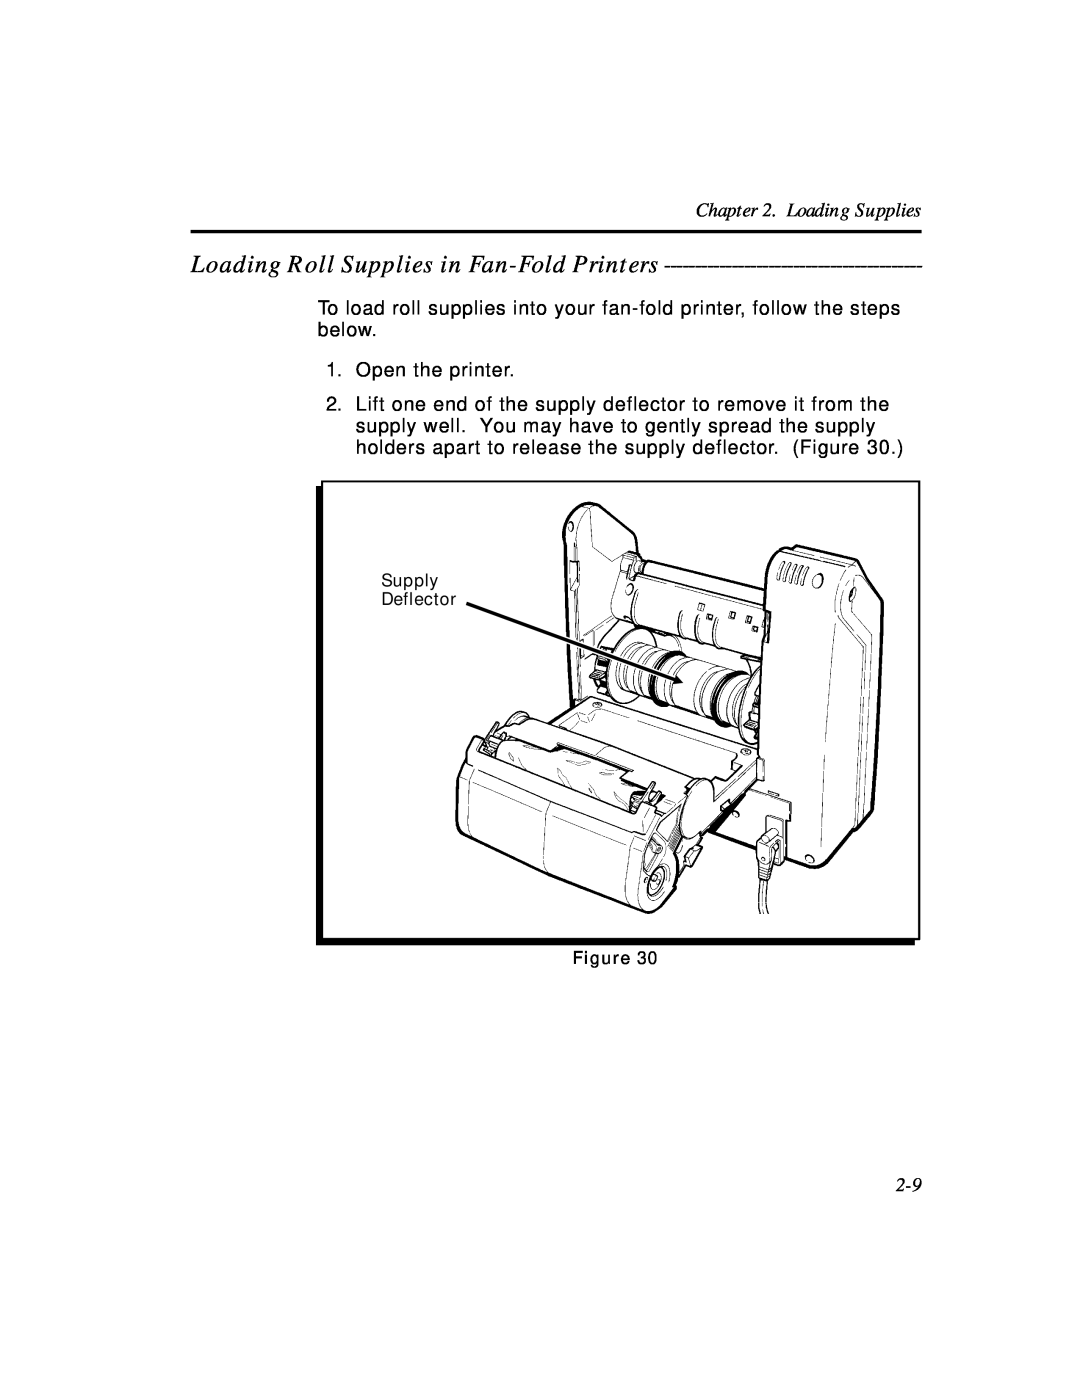 Paxar Monarch 9476 manual Loading Roll Supplies in Fan-Fold Printers, Loading Supplies 